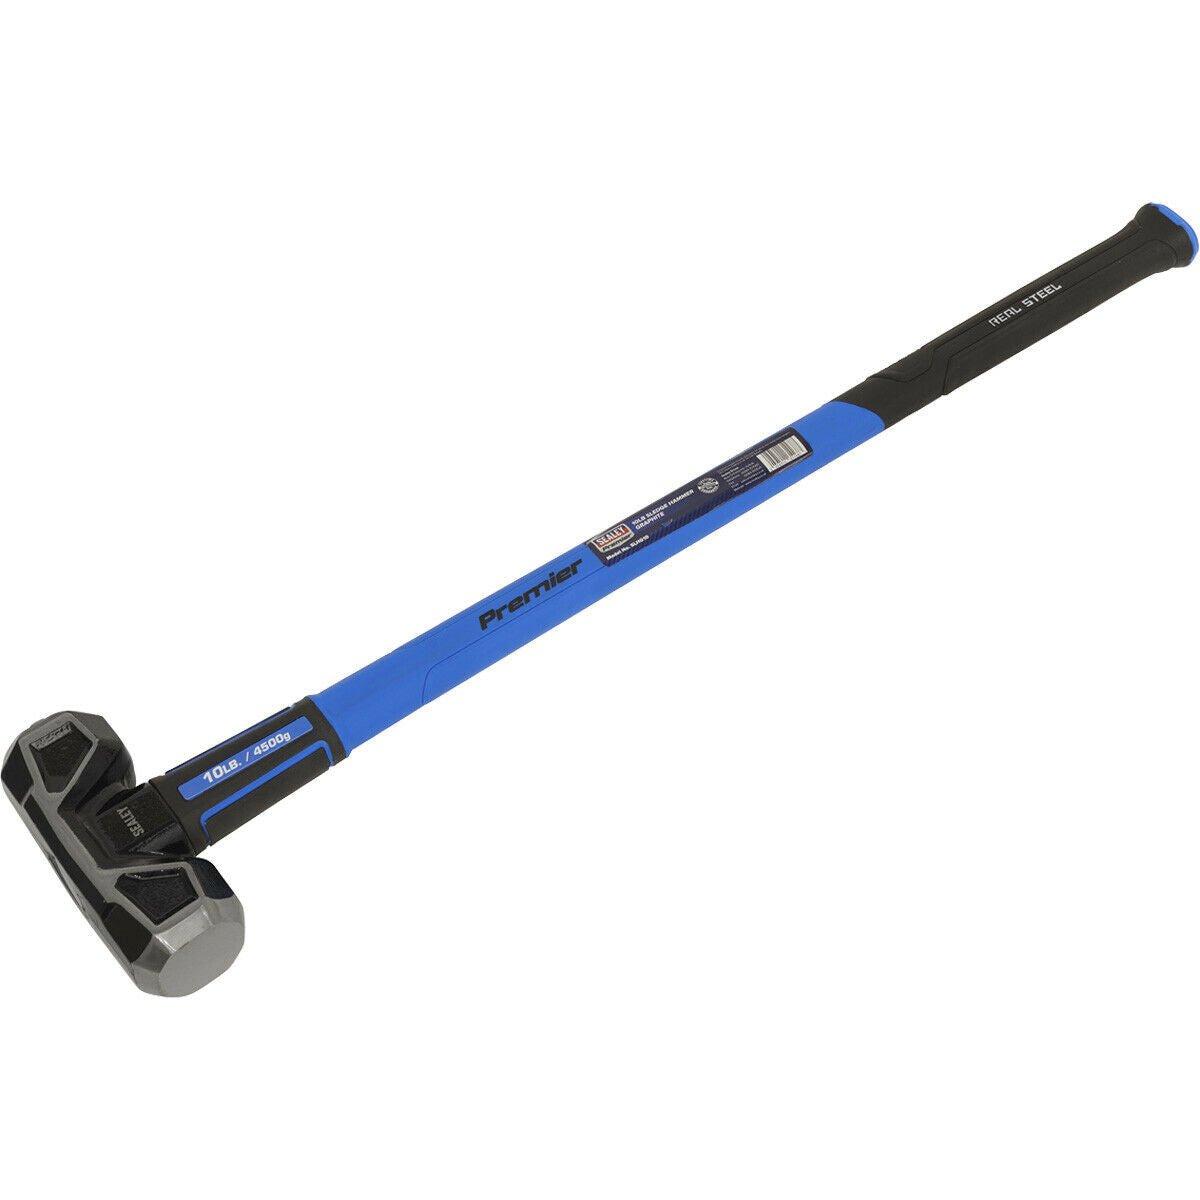 10lb Sledge Hammer - Fibreglass Handle - Rubber Grip - Drop Forged Carbon Steel